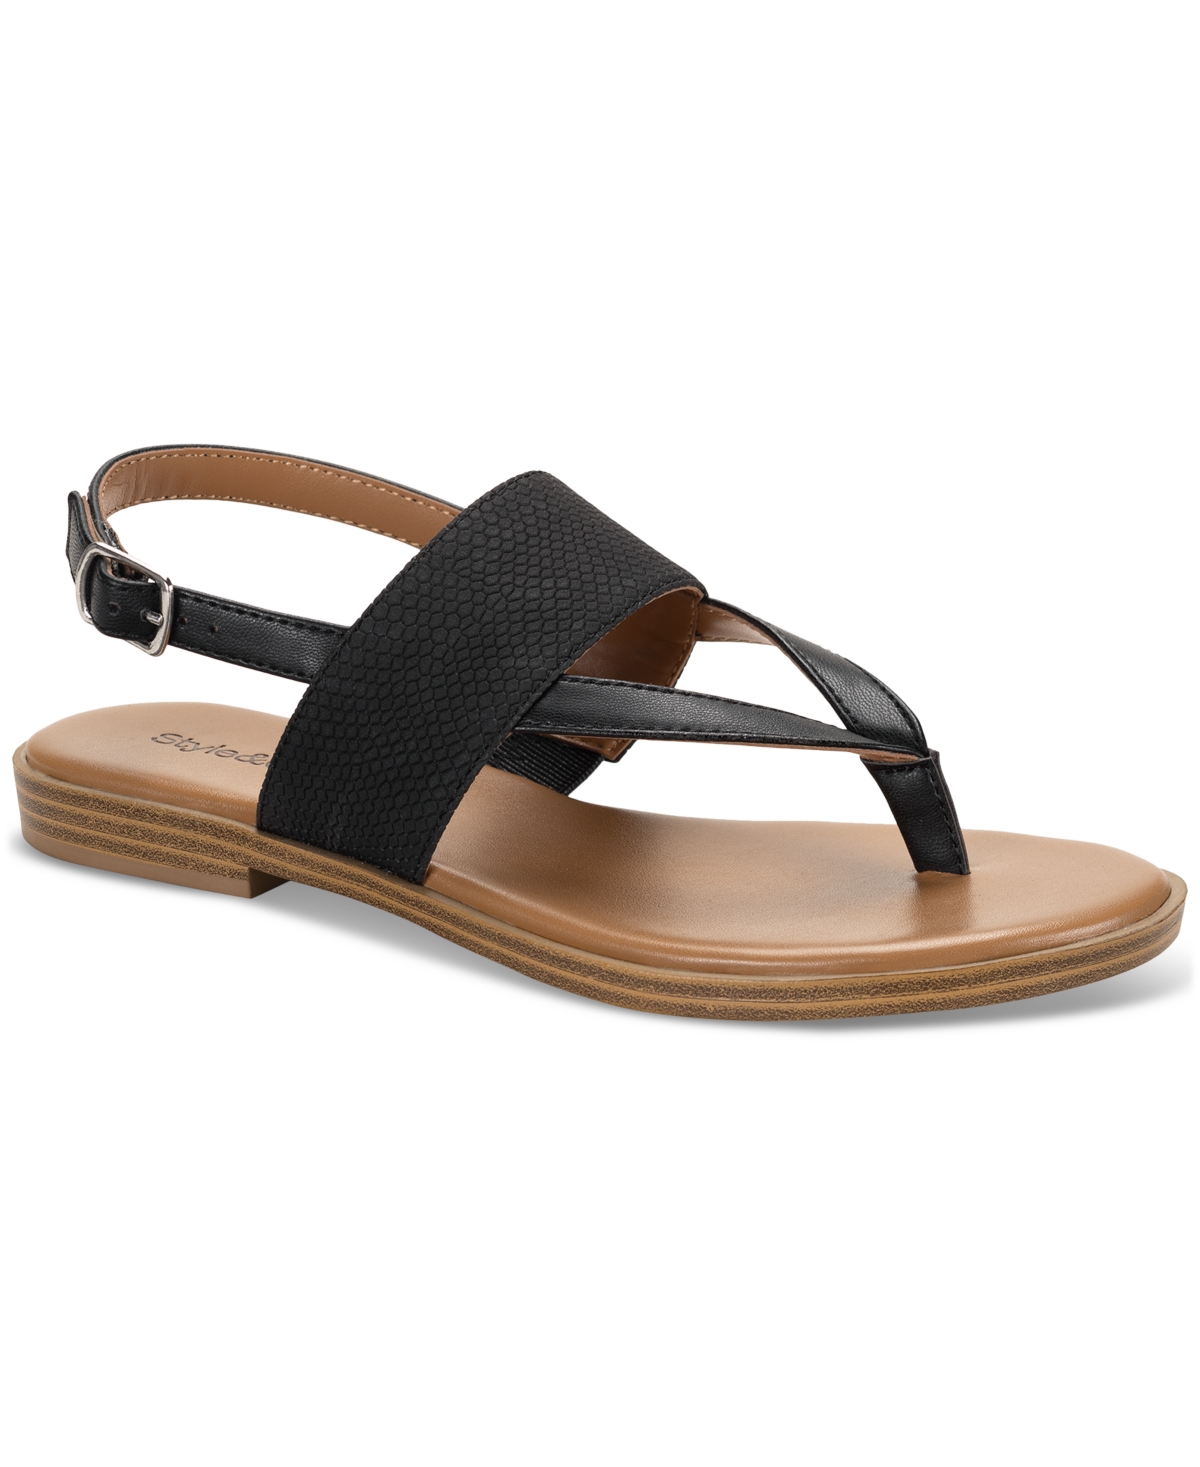 Sadiee Thong Flat Slingback Sandals, Created for Macy's - Black/natural Raffia